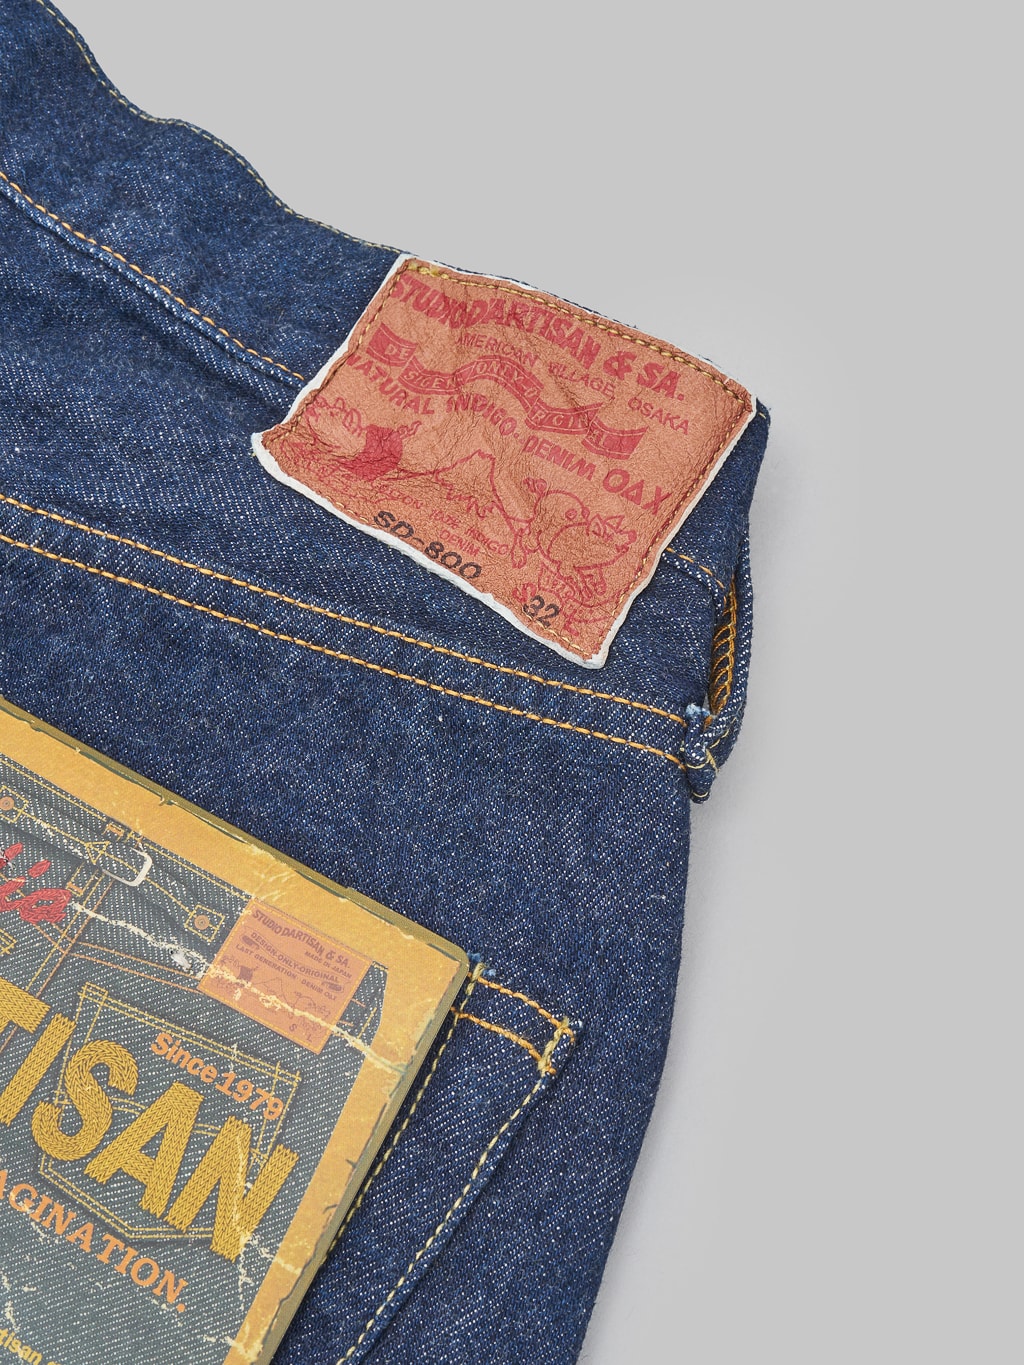 Studio D'Artisan natural indigo jeans authentic patch